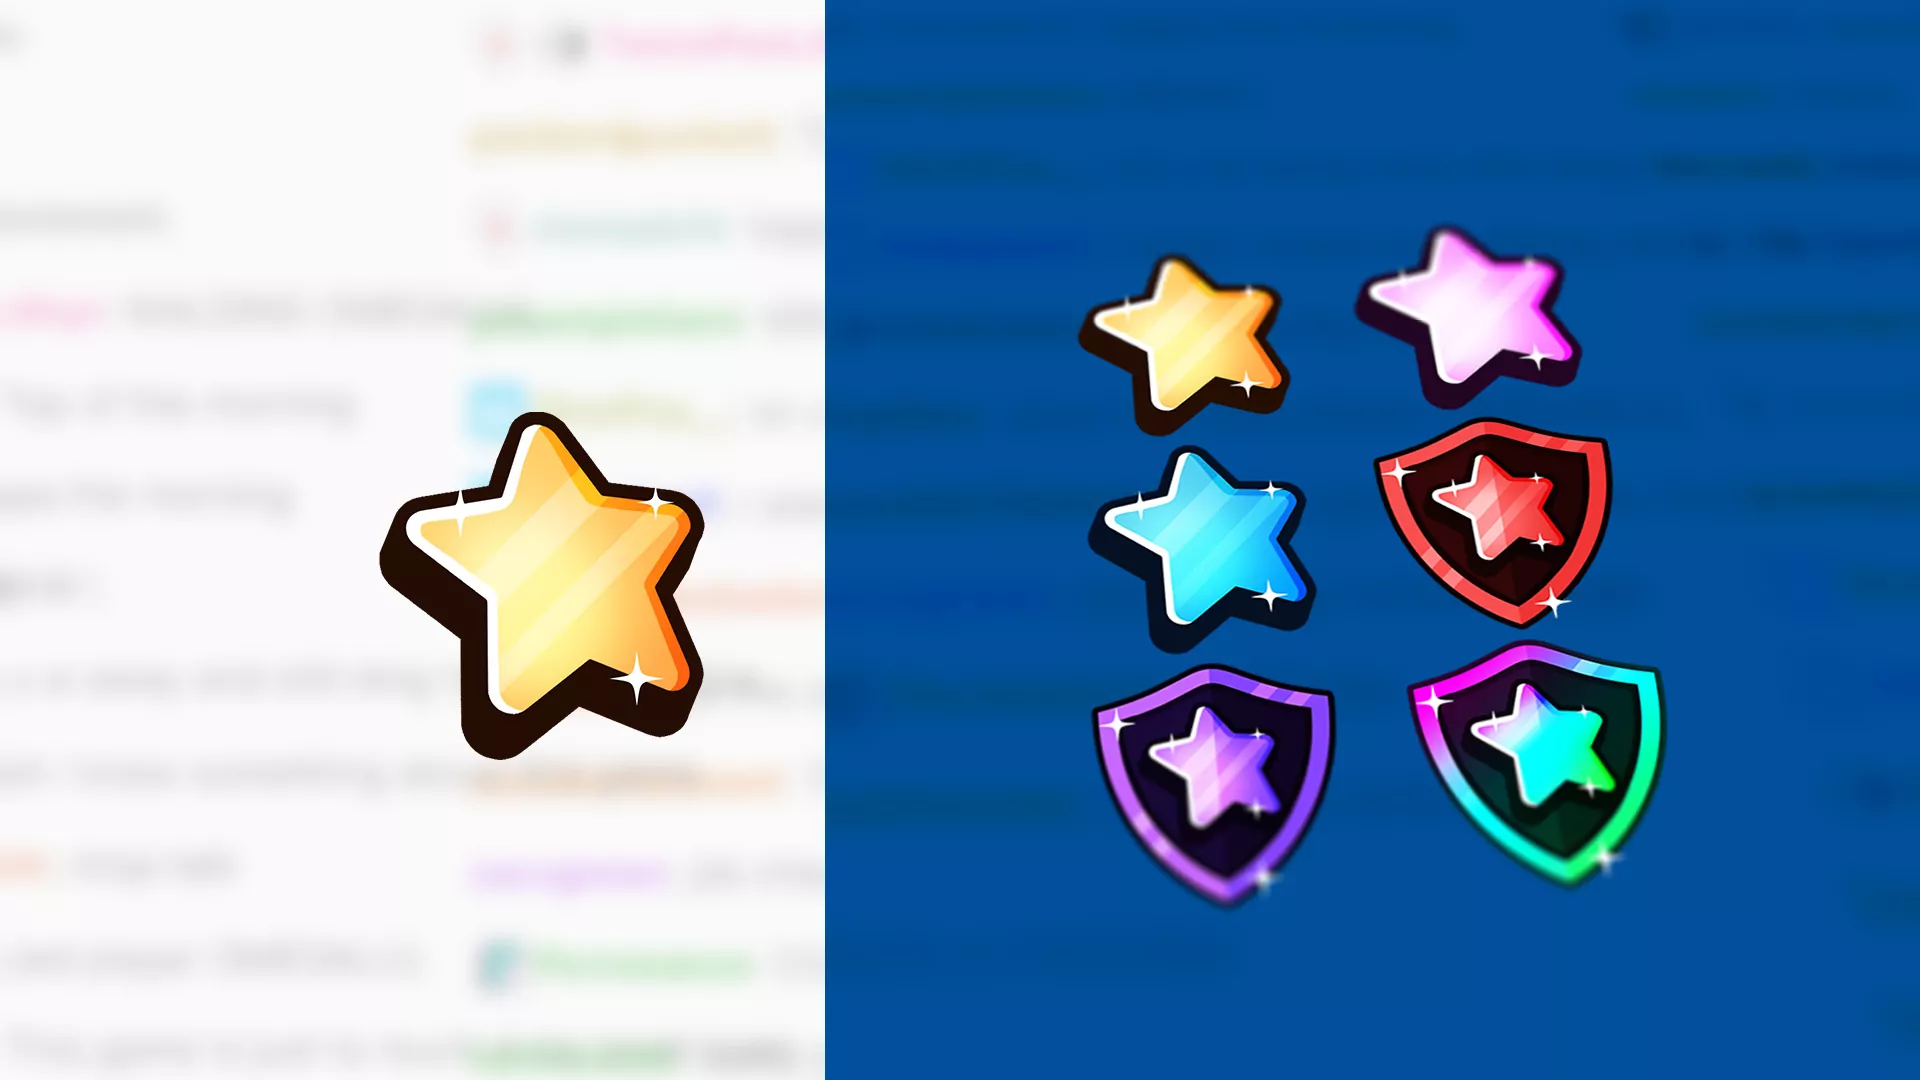 Star Sub Badges - 6 x Shiny Twitch Sub Badges with Photoshop Files